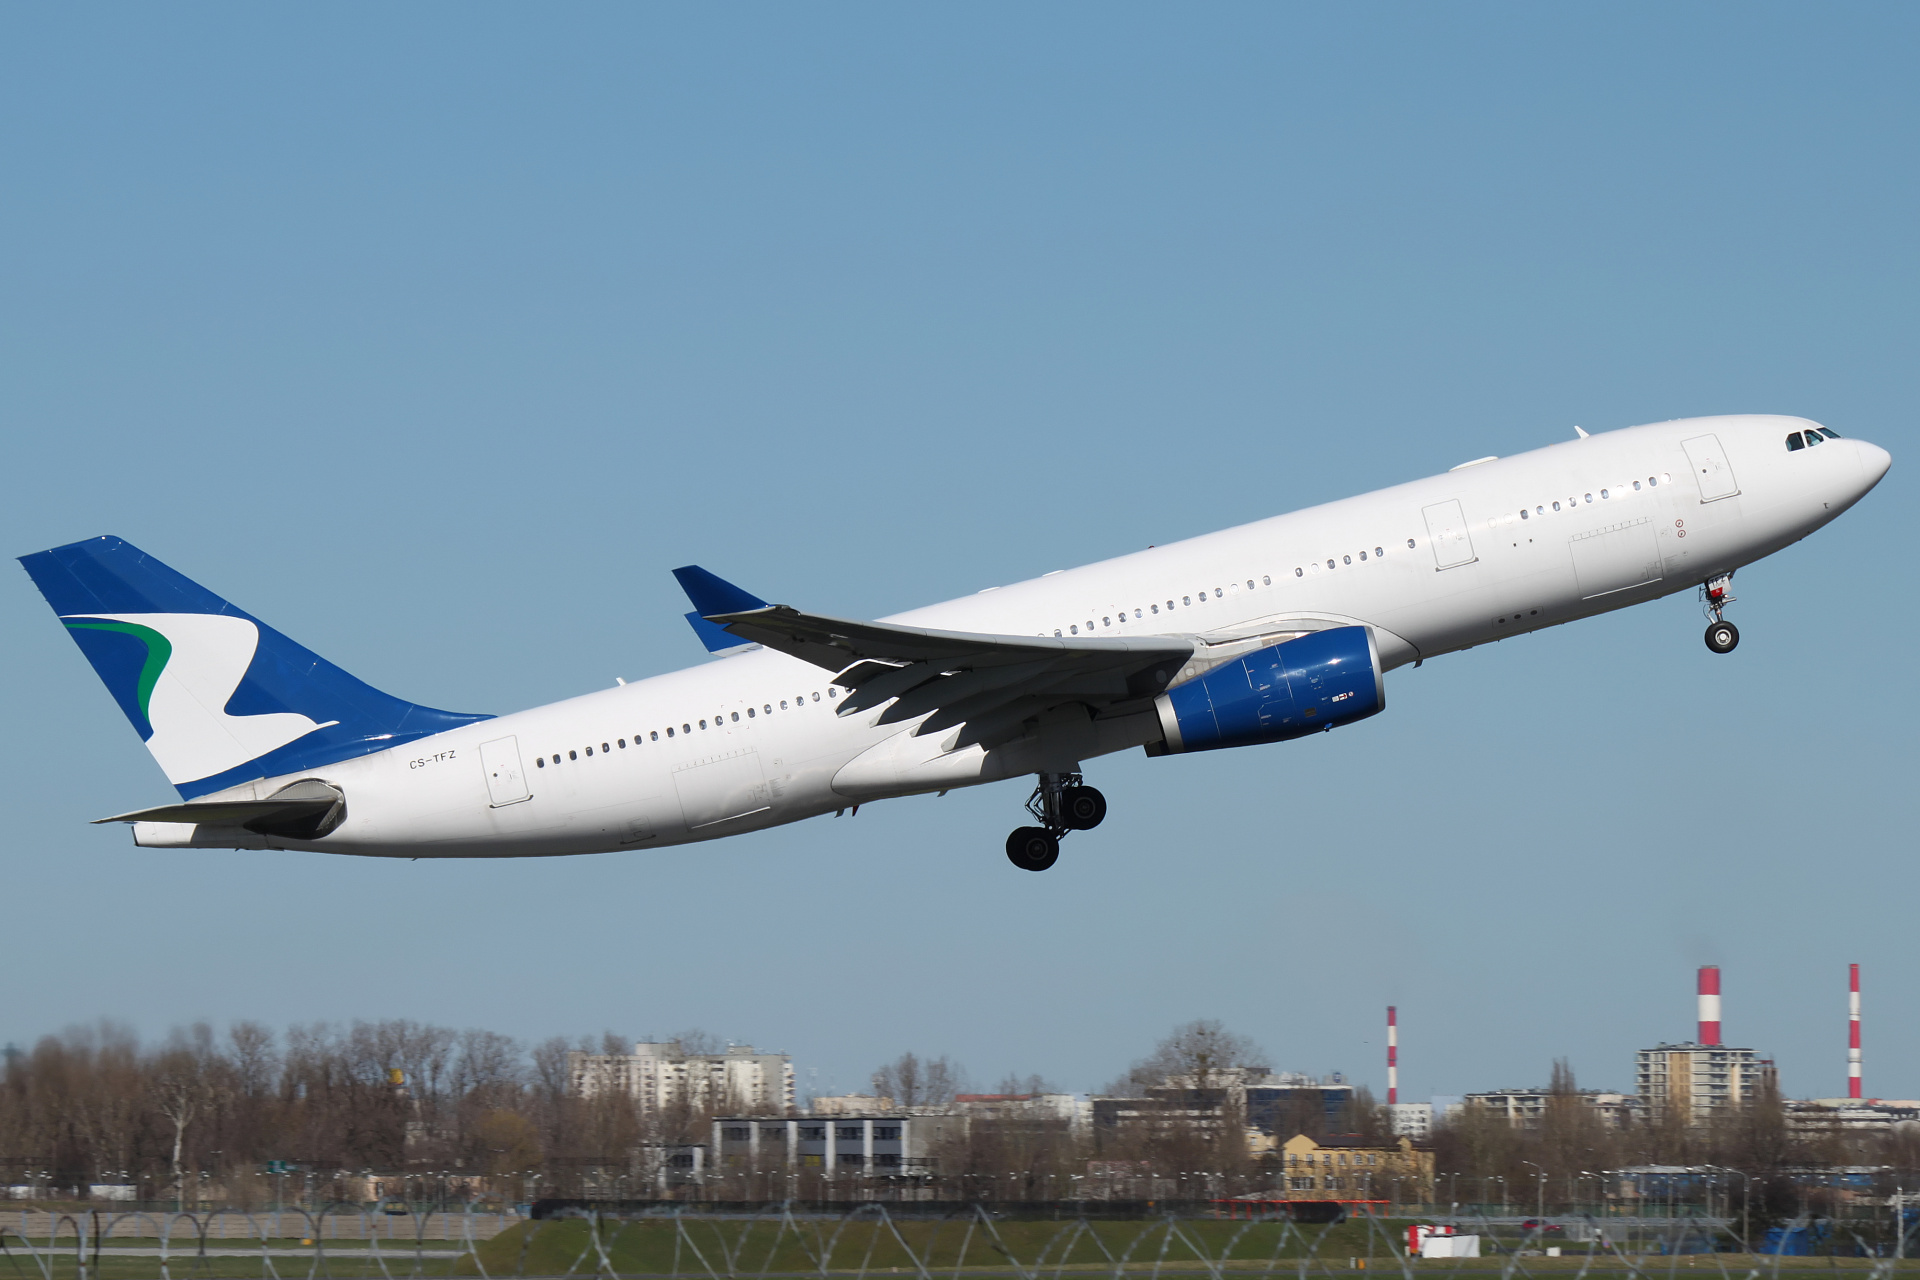 CS-TFZ (Aircraft » EPWA Spotting » Airbus A330-200 » Hi Fly)